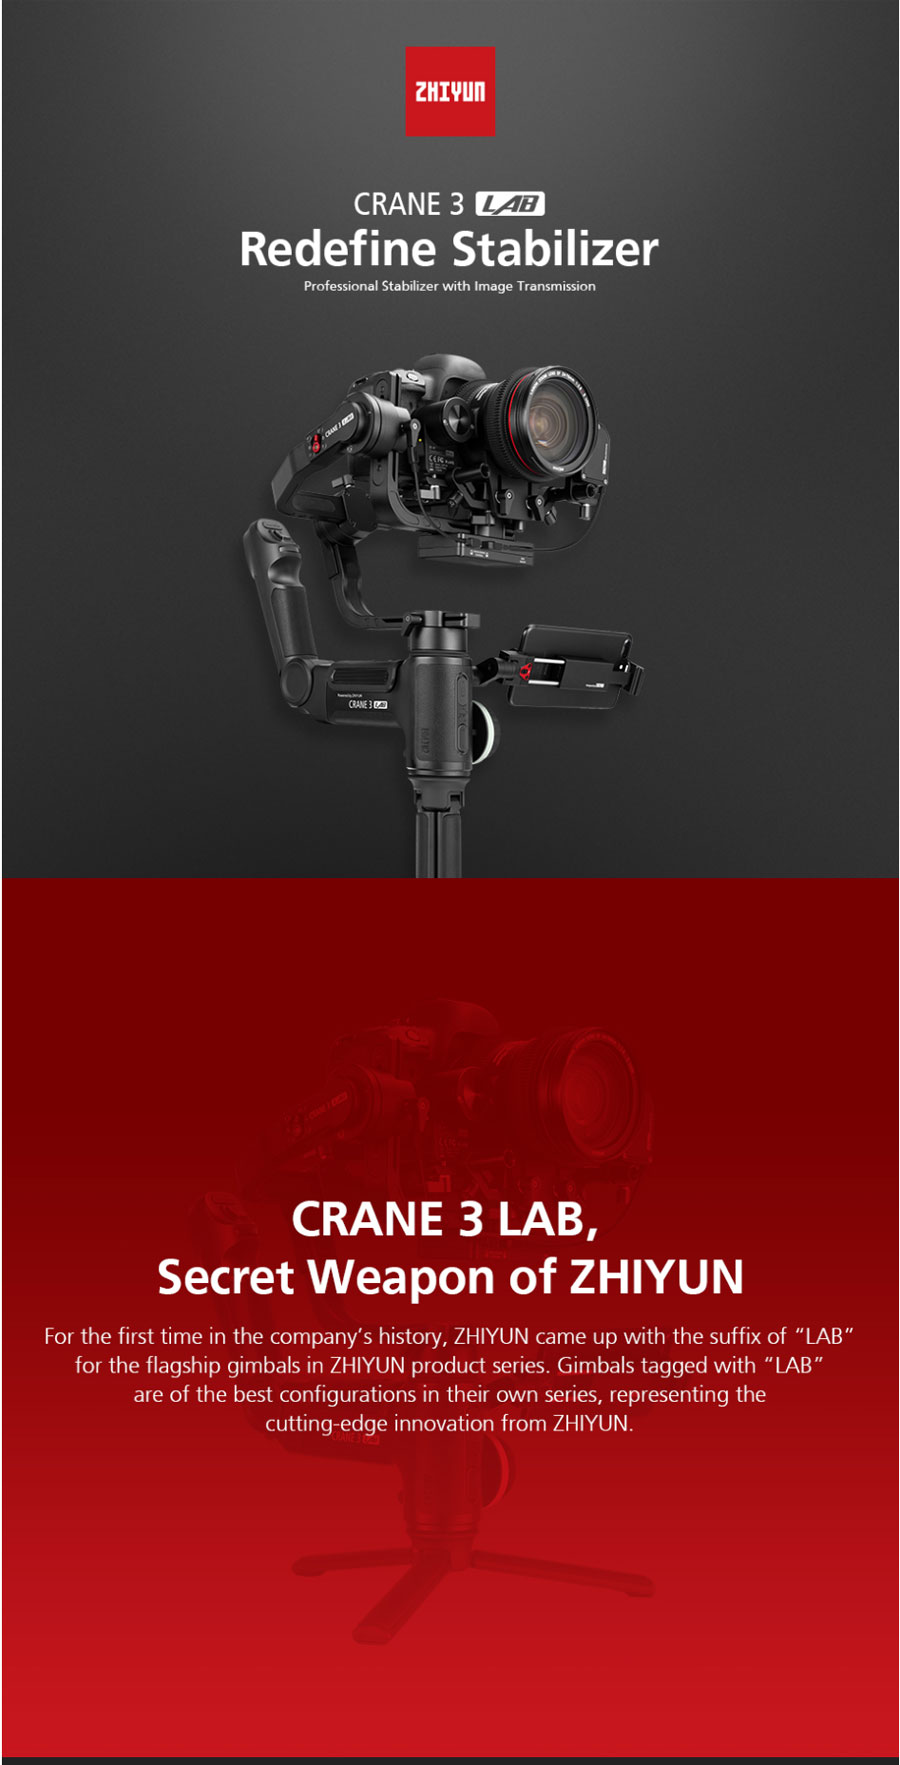 ZHIYUN-Crane-3-LAB-Standard-3-Axis-Handheld-Wireless-1080P-FHD-Image-Transmission-Gimbal-Stabilizer--1594645